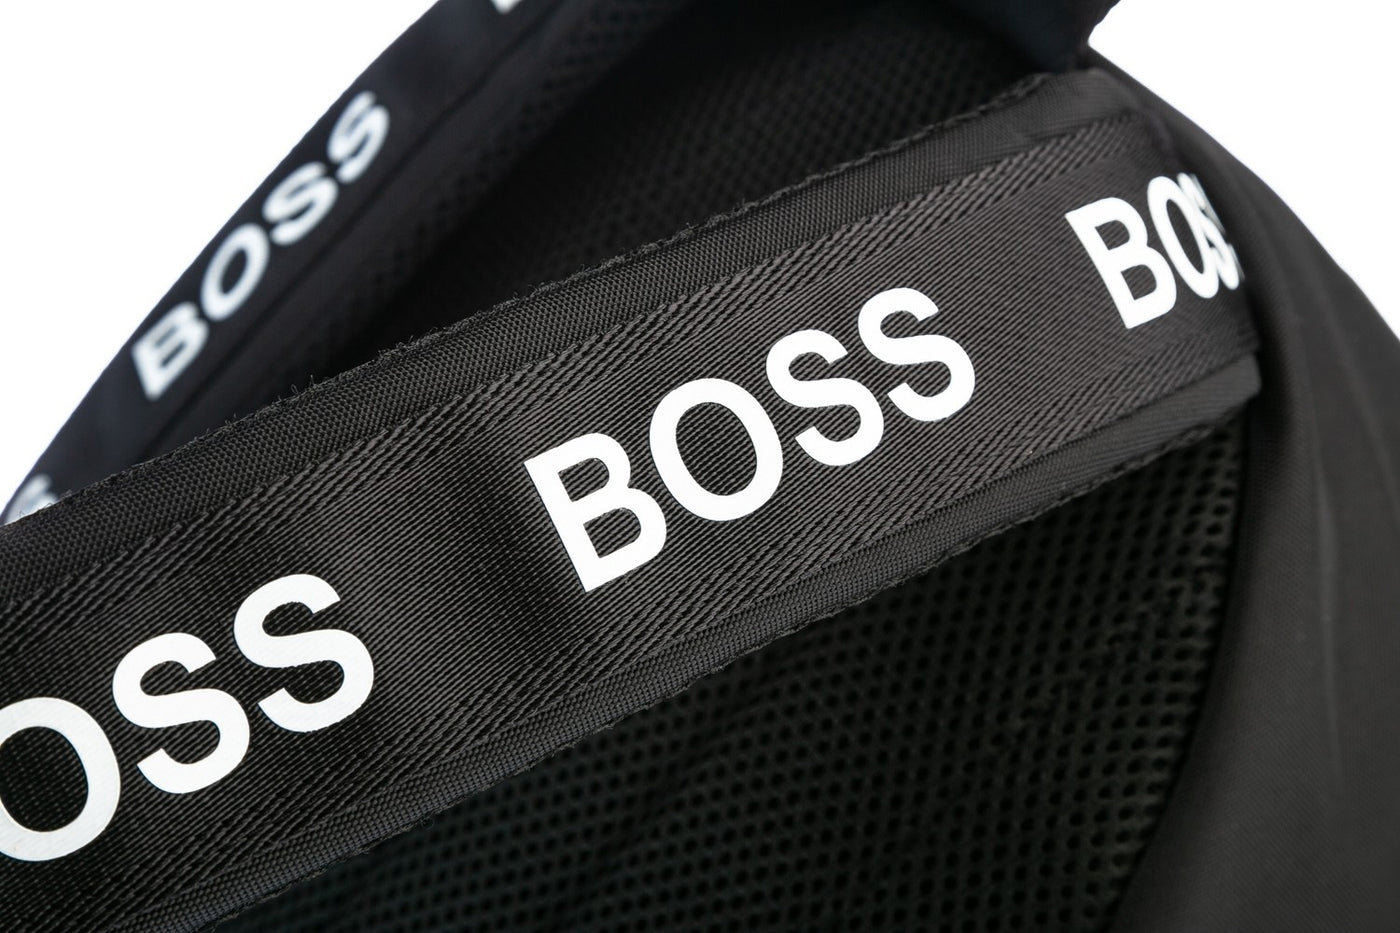 BOSS Pixel BW_Backpack Bag in Black